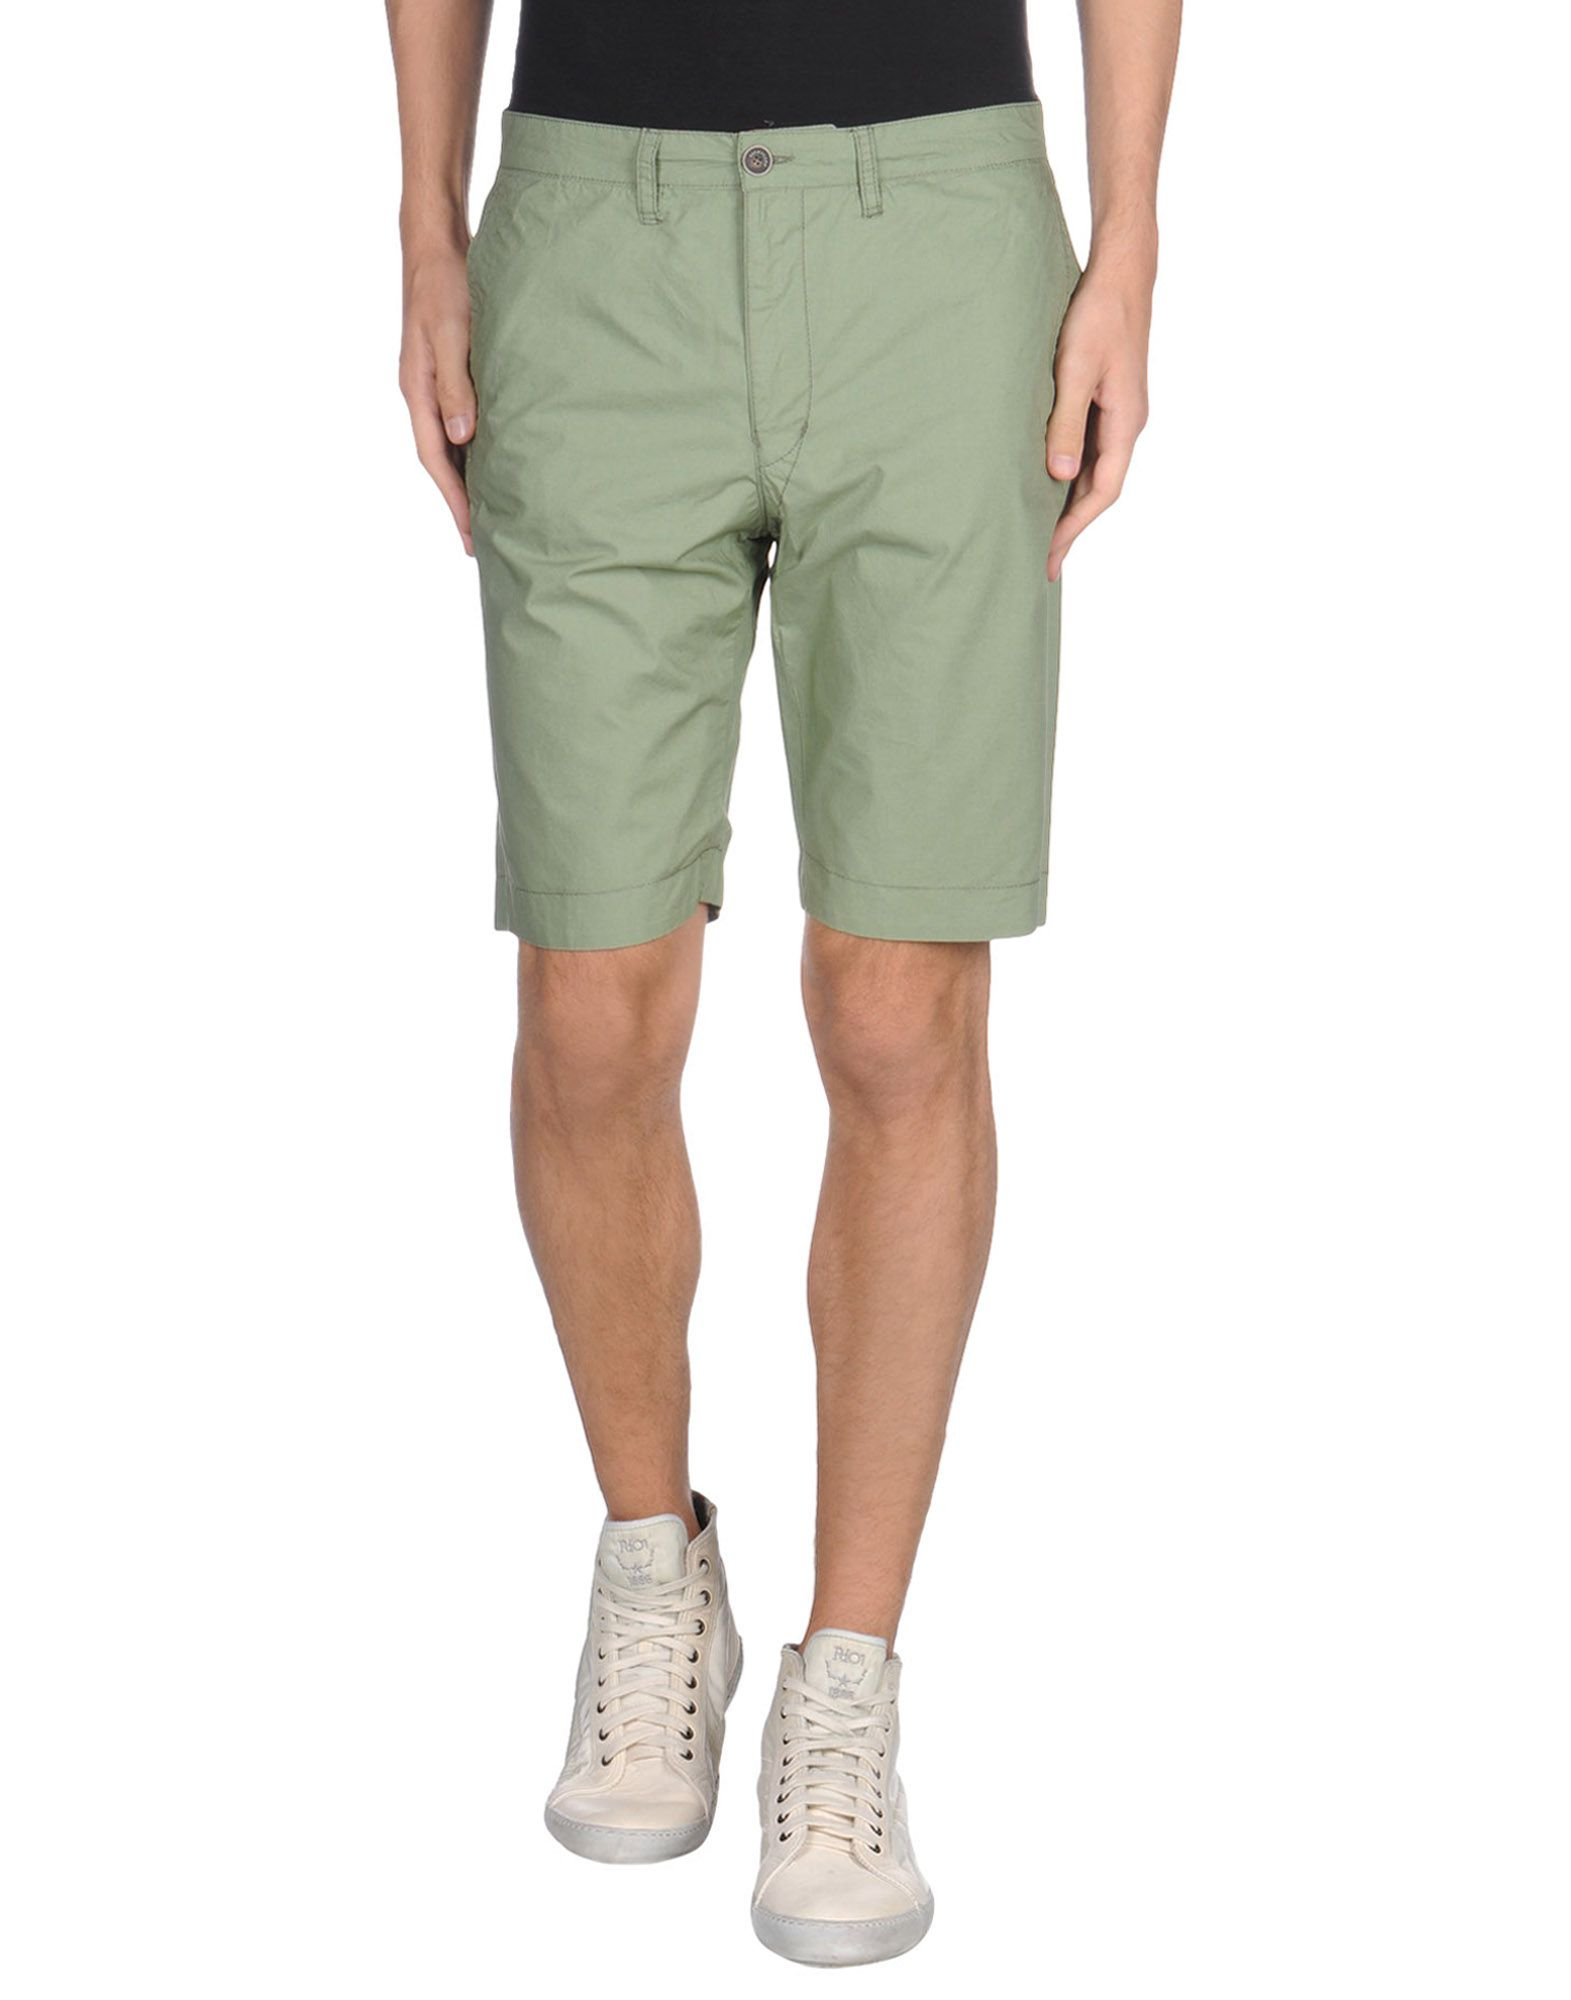 Lyst - Esemplare Bermuda Shorts in Green for Men